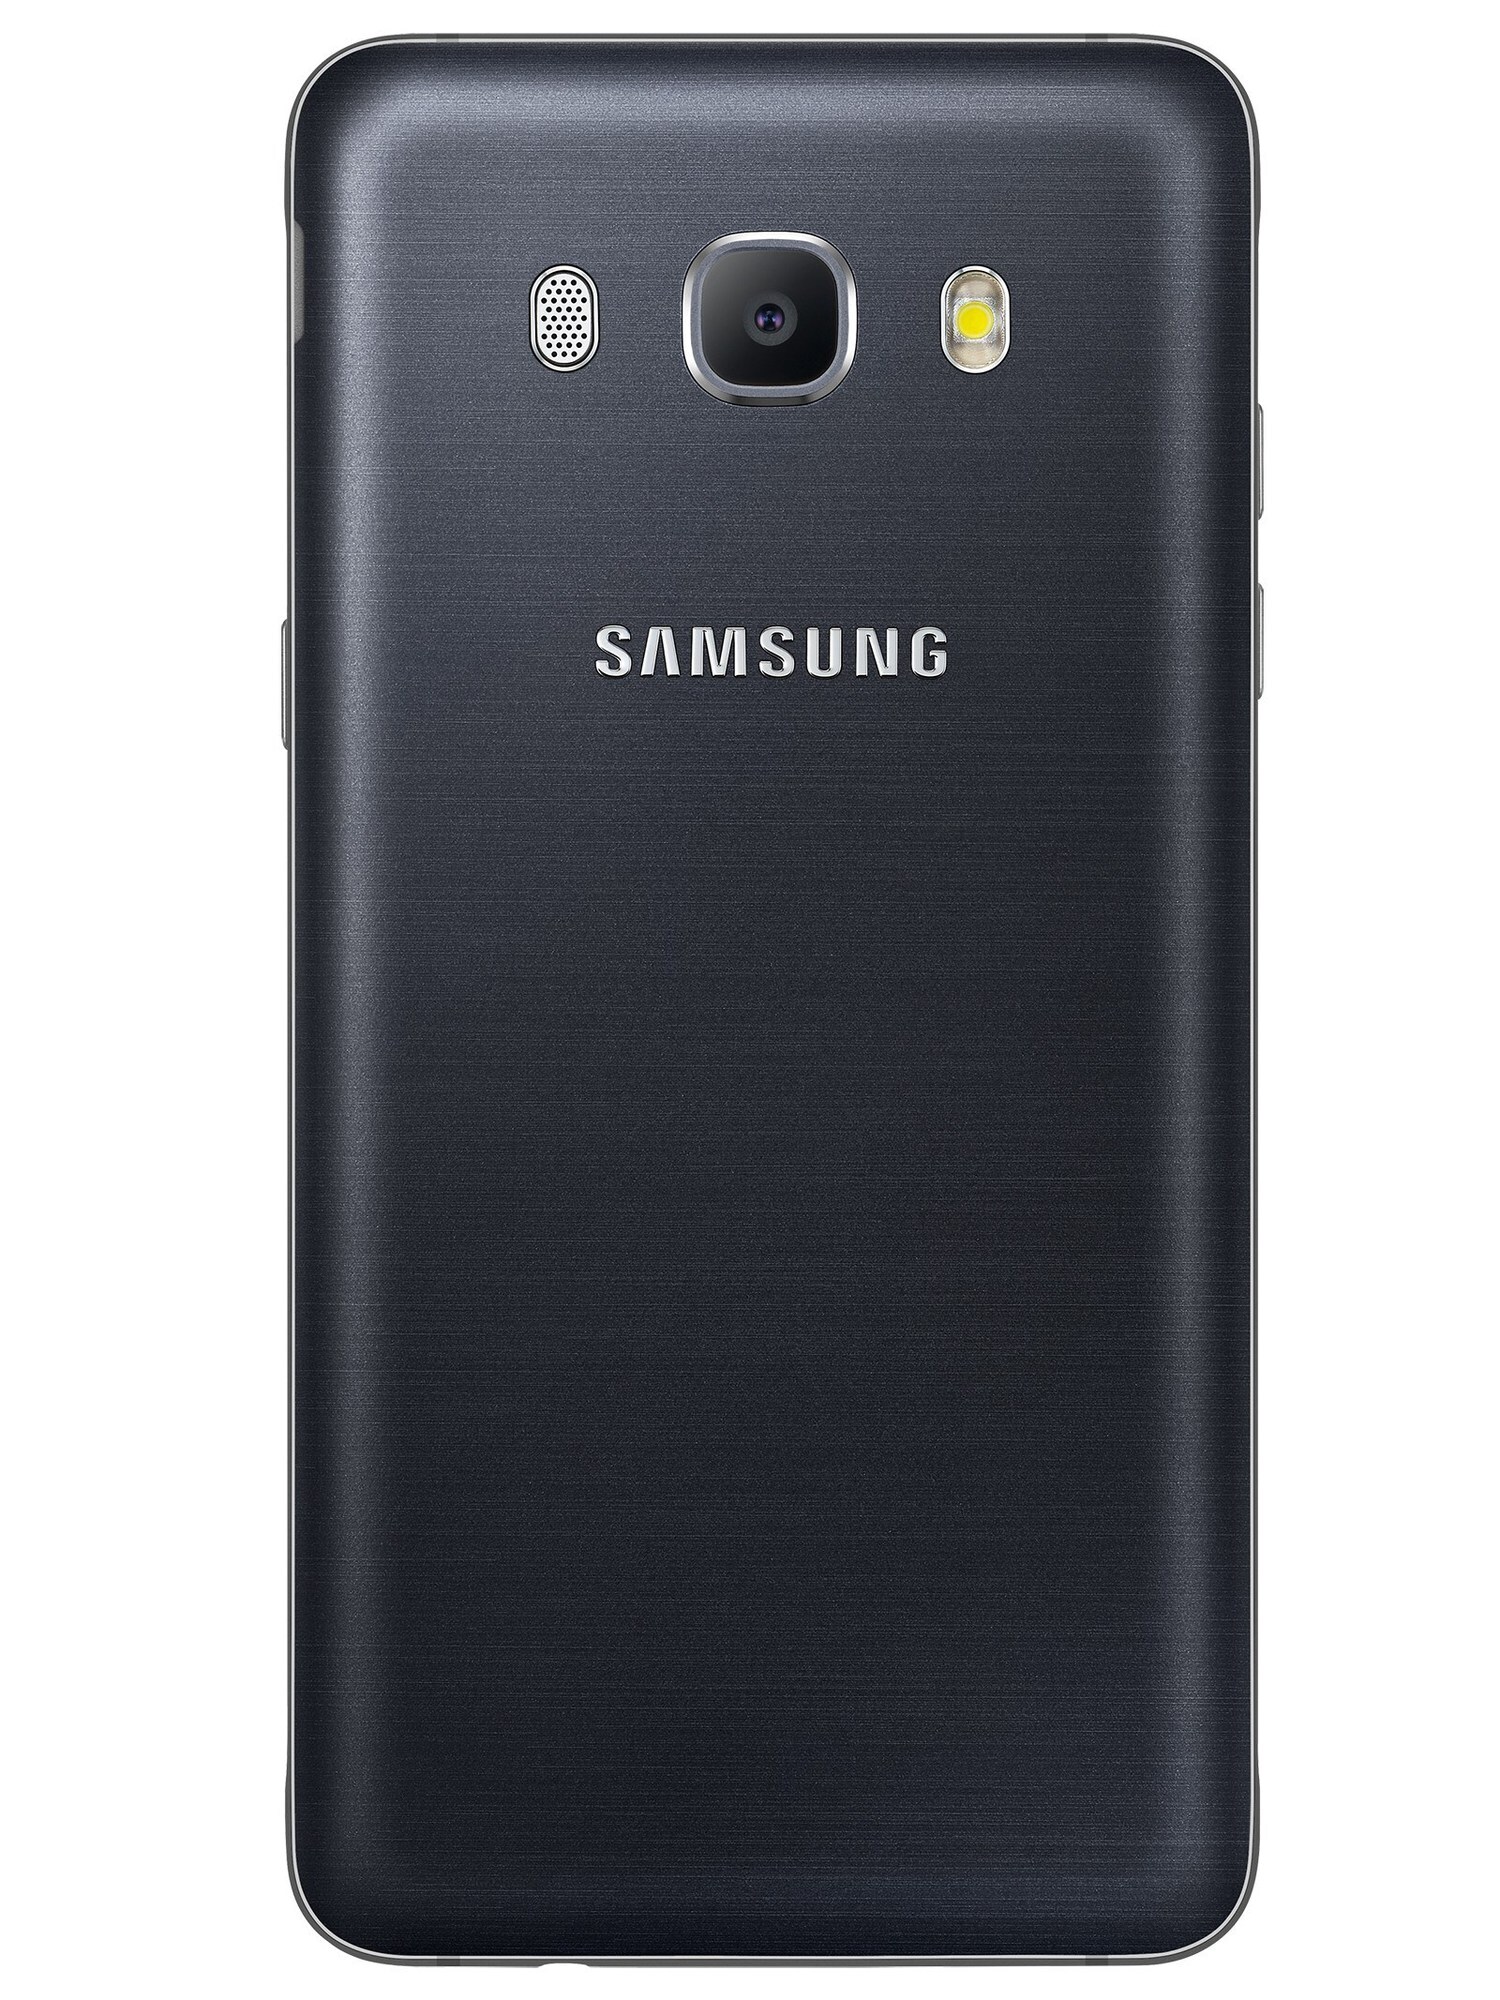 Samsung Galaxy J5 smarttelefon (sort) - Mobiltelefon - Elkjøp